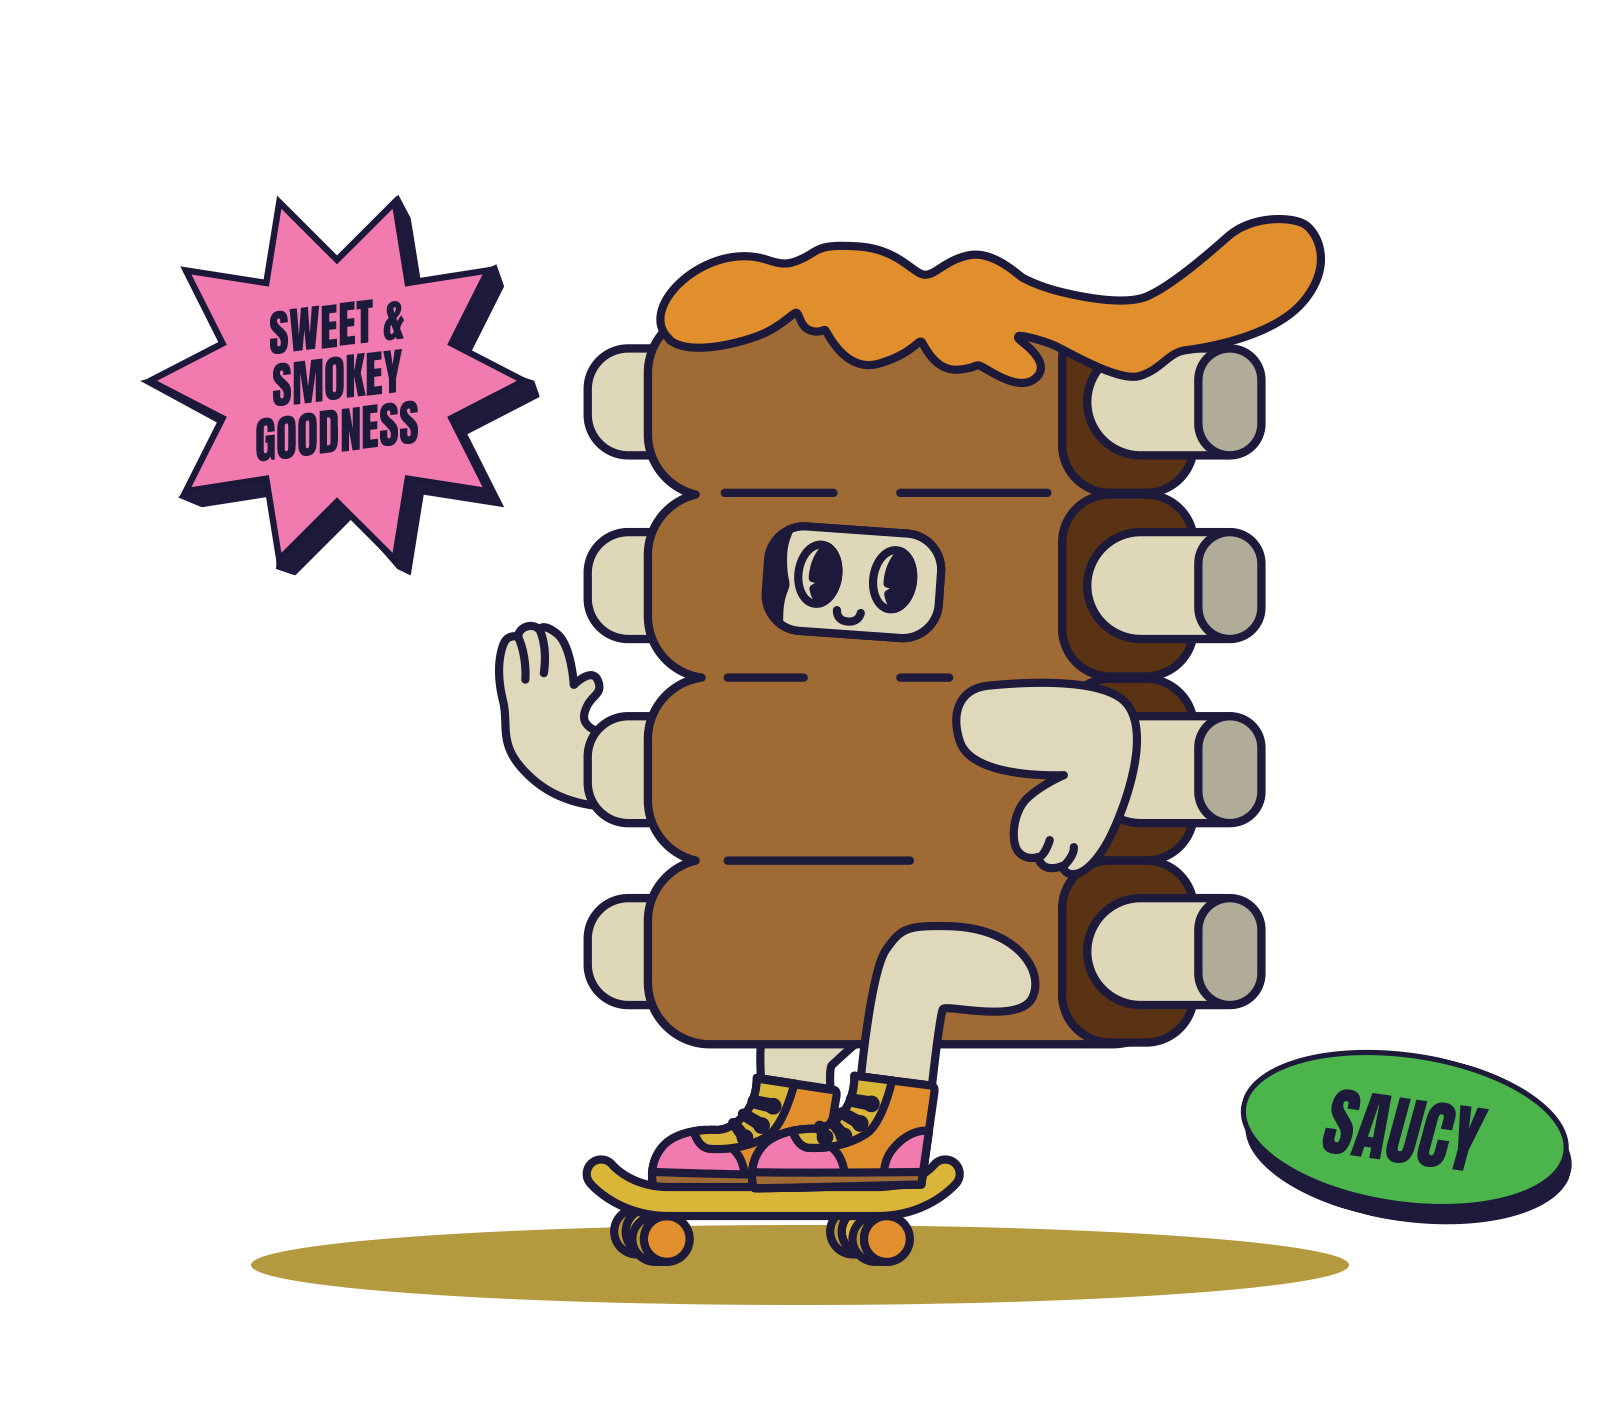 Smoky Carolina BBQ character in ribs costume doing a kickflip on skateboard